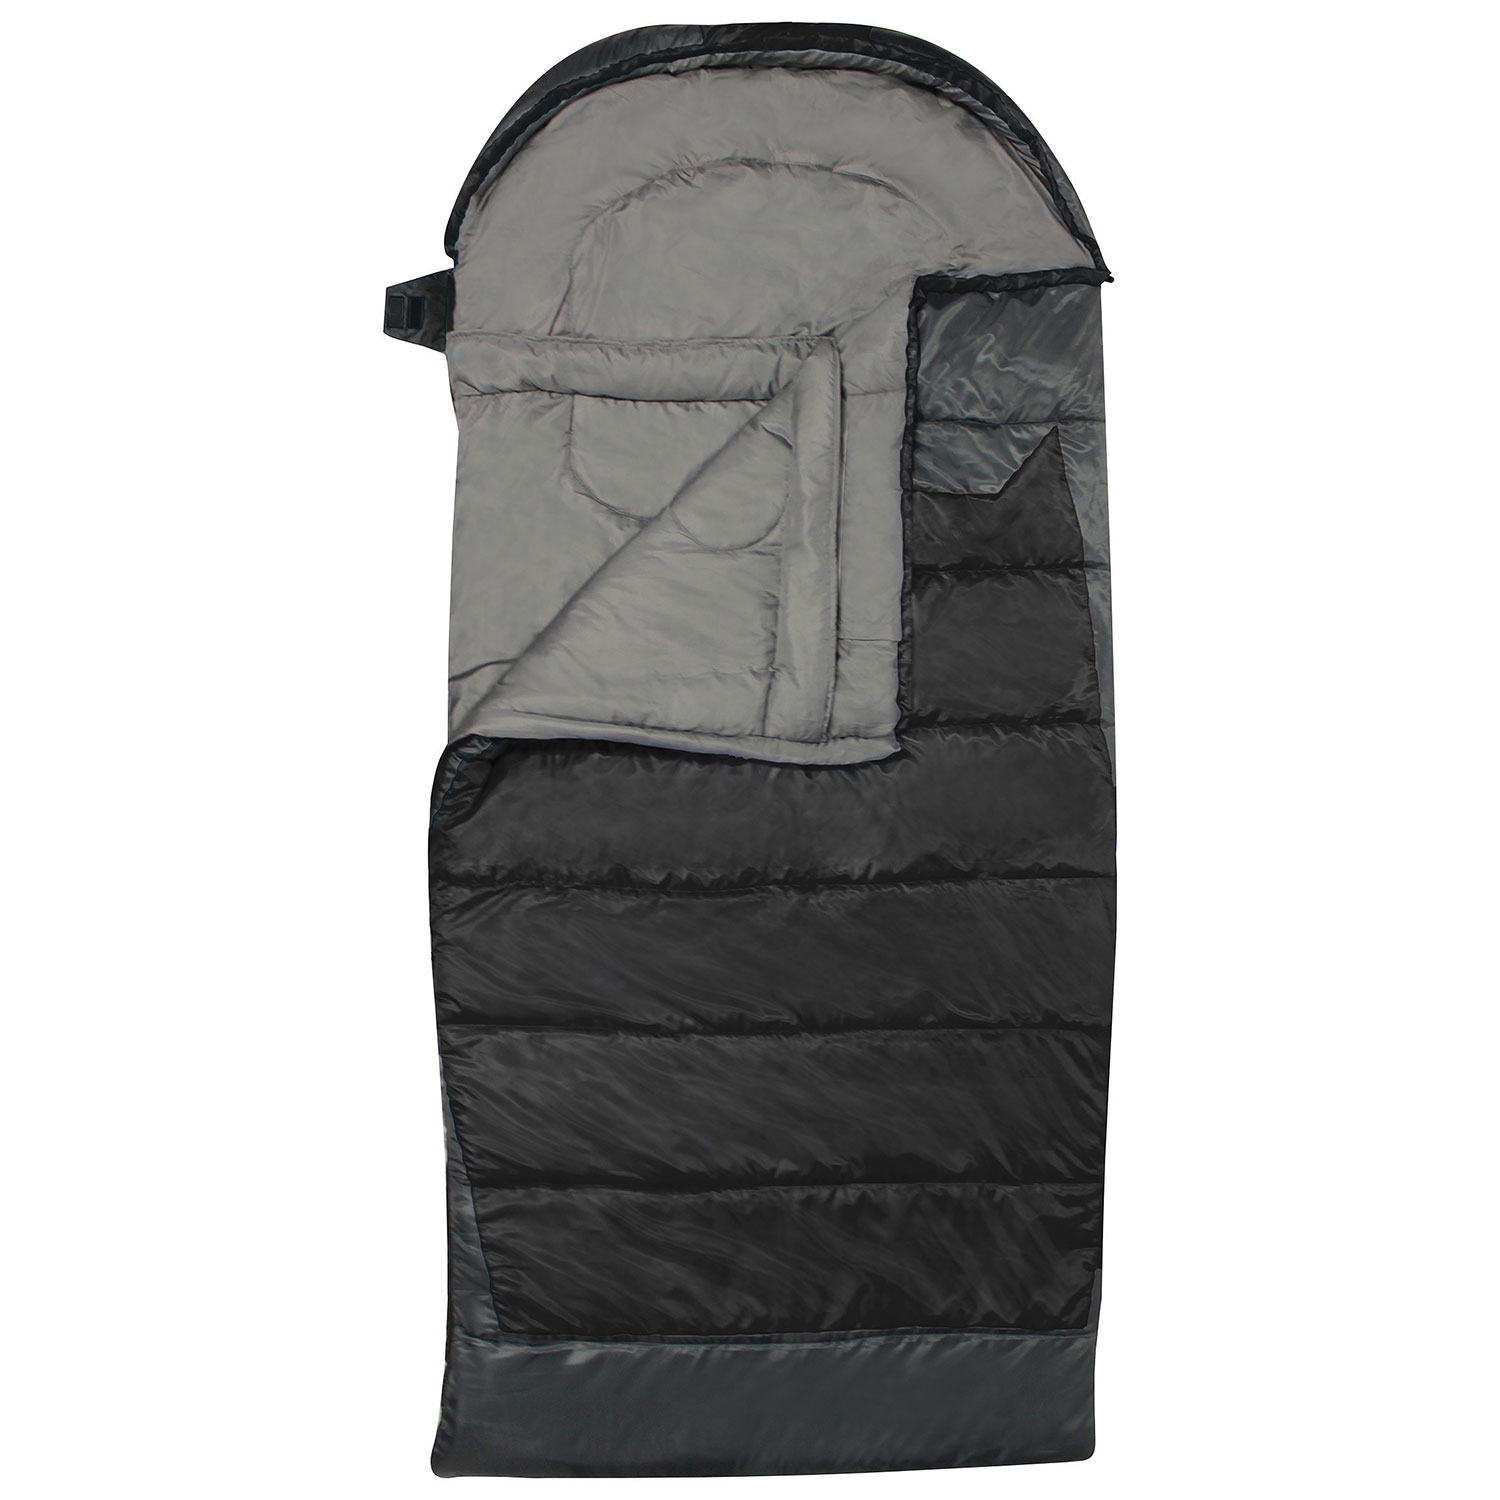 Rockwater Designs Rectangular Heat Zone Sleeping Bag (-15-Degrees Celcius) - Black/Dark Grey